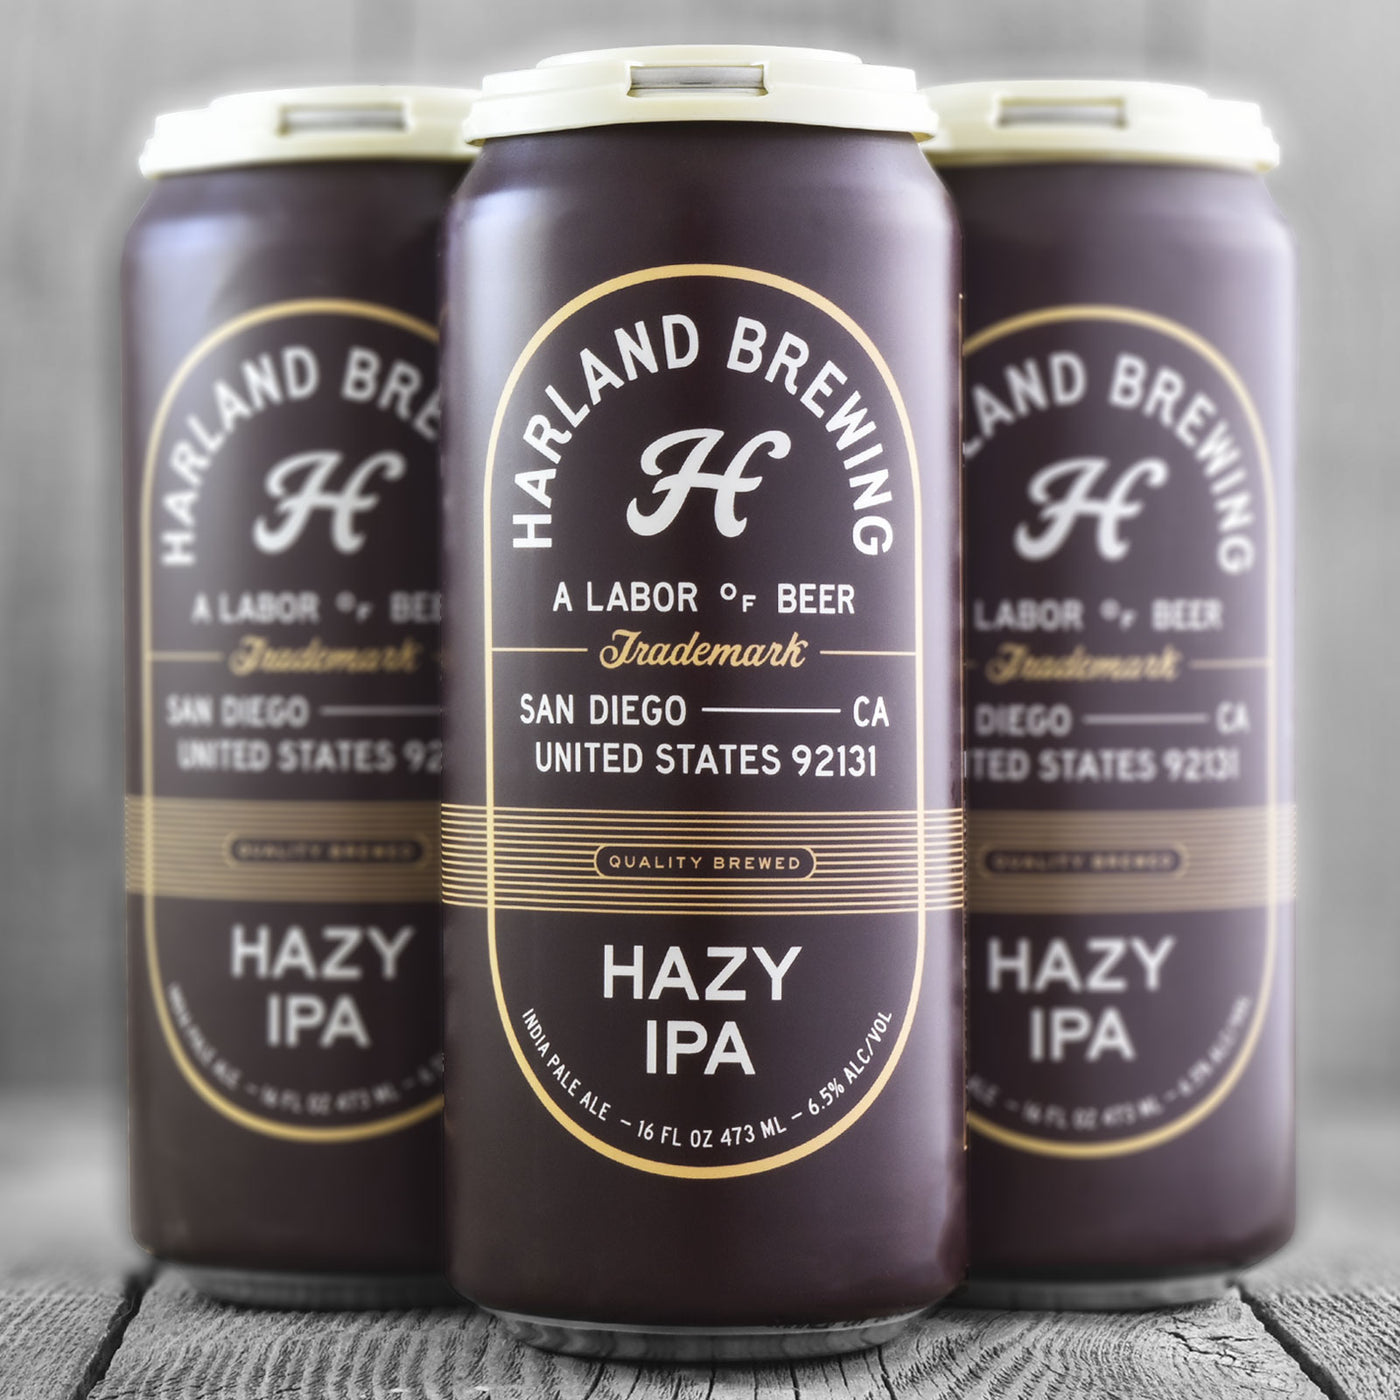 Harland Brewing Co. Hazy IPA